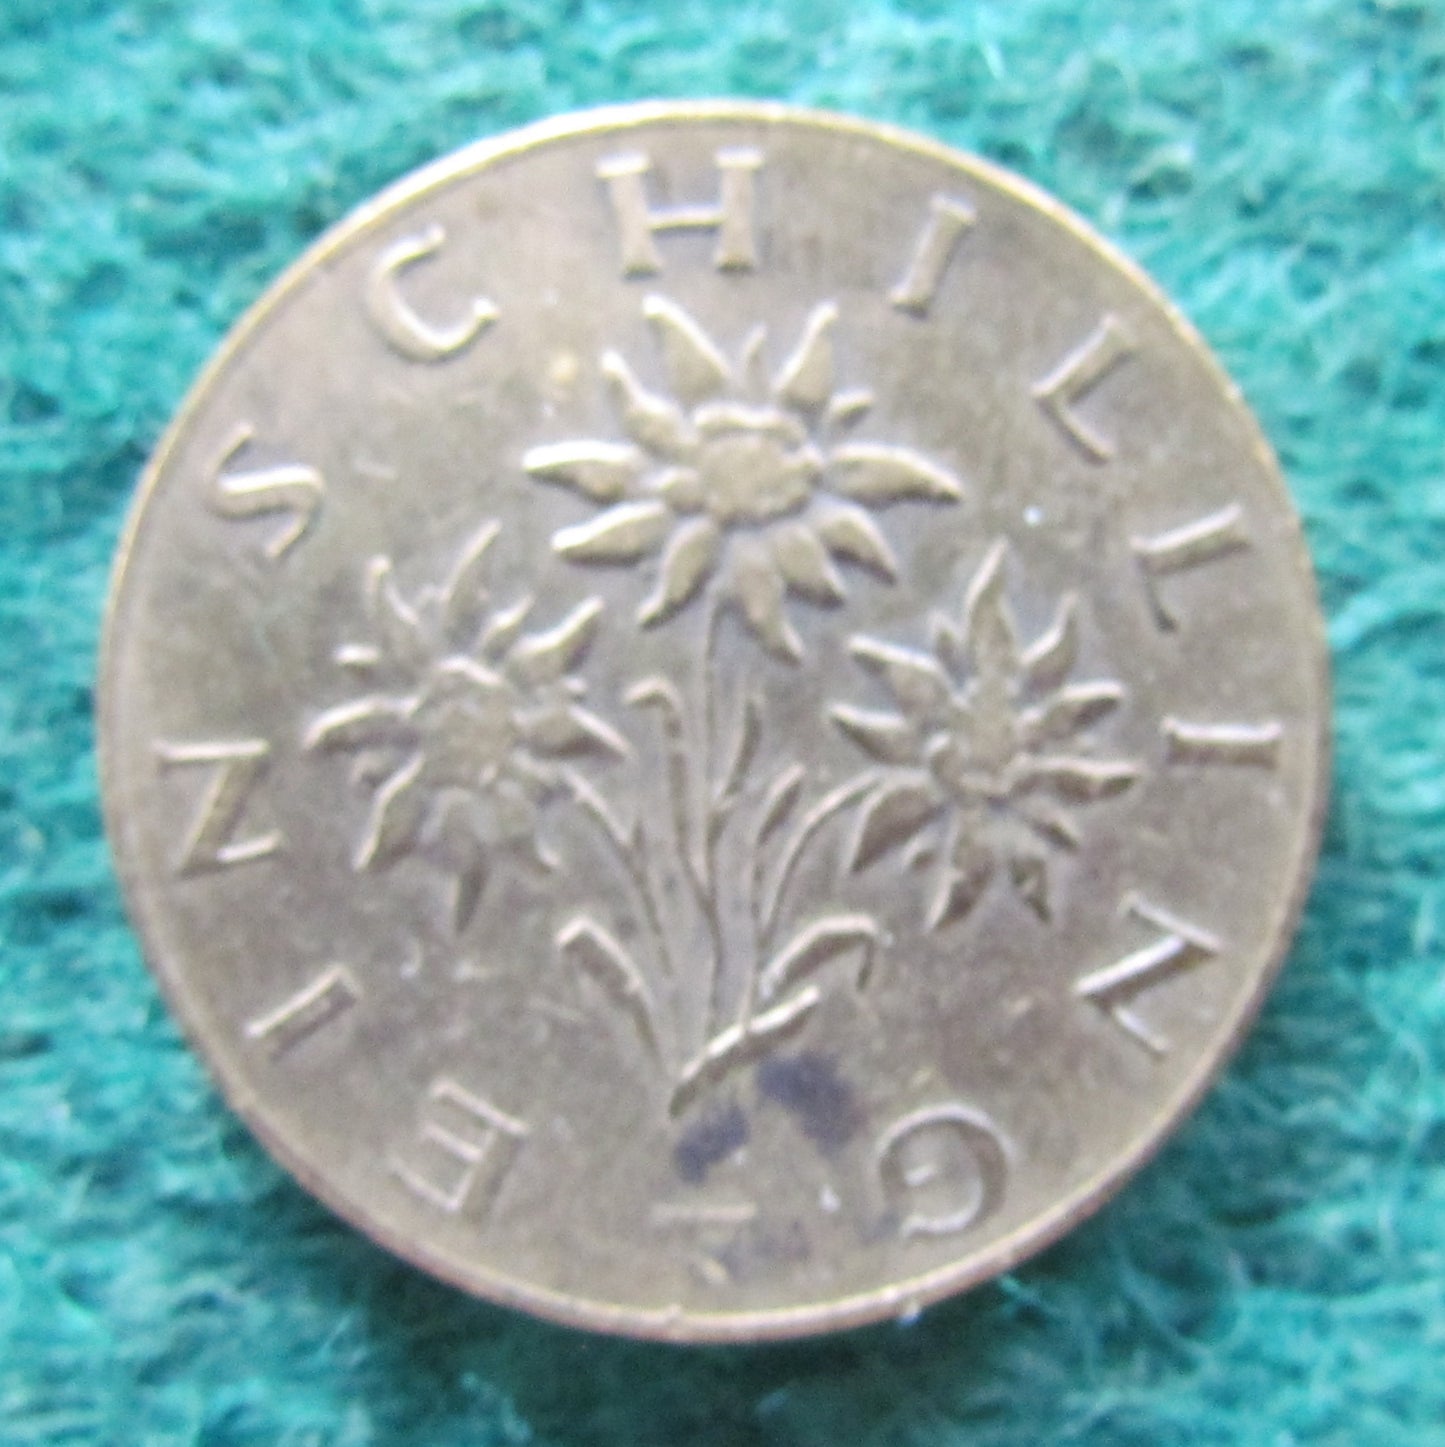 Austria 1959 1 Schilling Coin